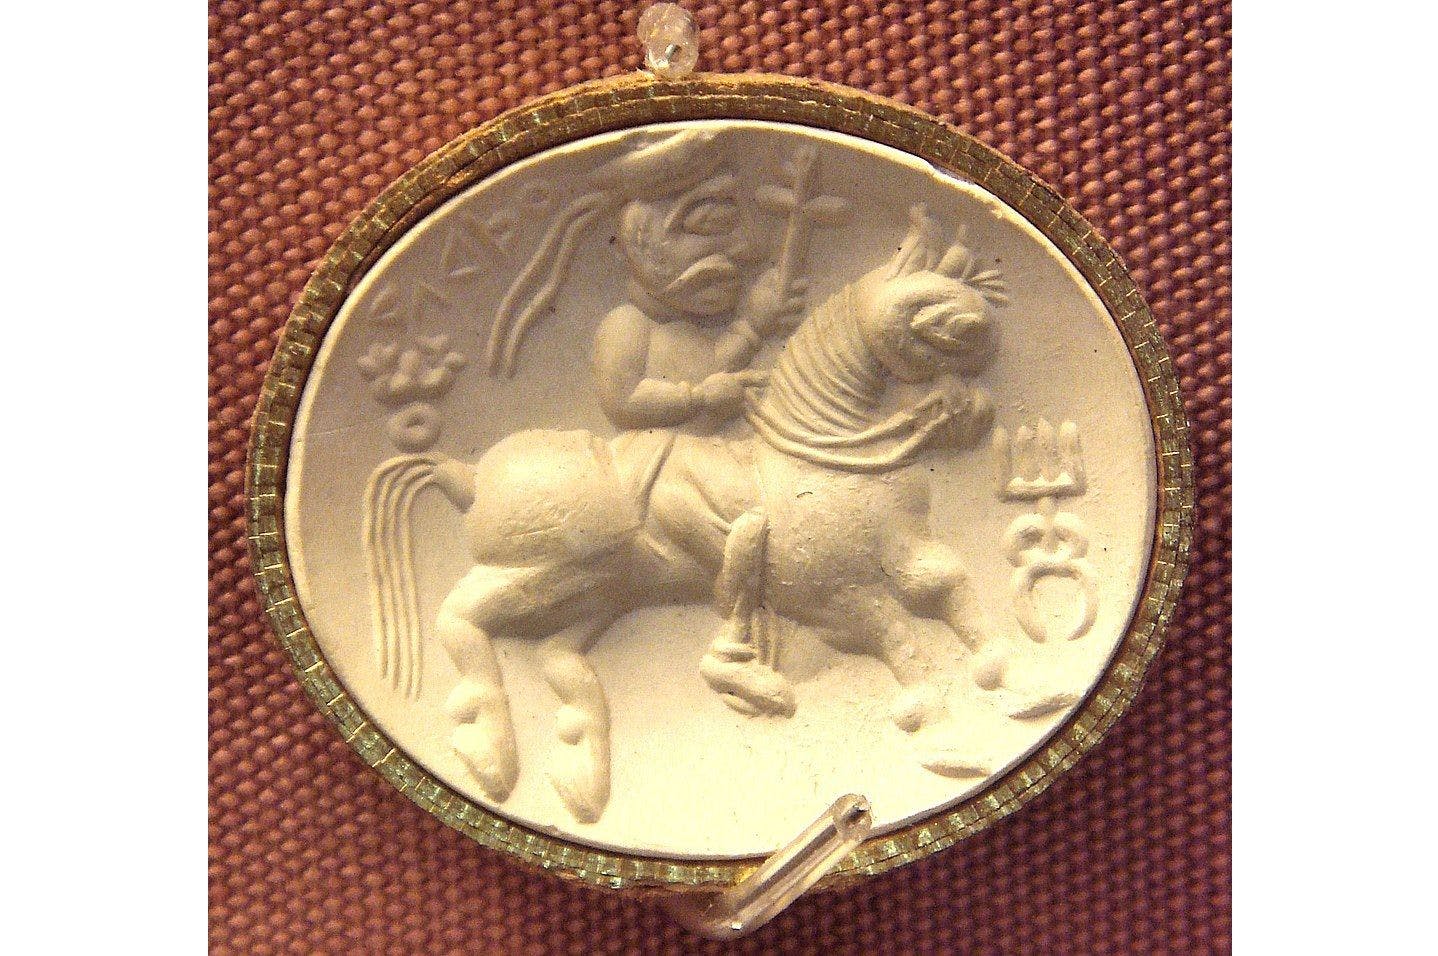 Kushana Carnelian seal representing the Iranian divinity Adsho (ΑΘϷΟ legend in Greek letters), with triratana symbol left, and Kanishka’s dynastic mark right